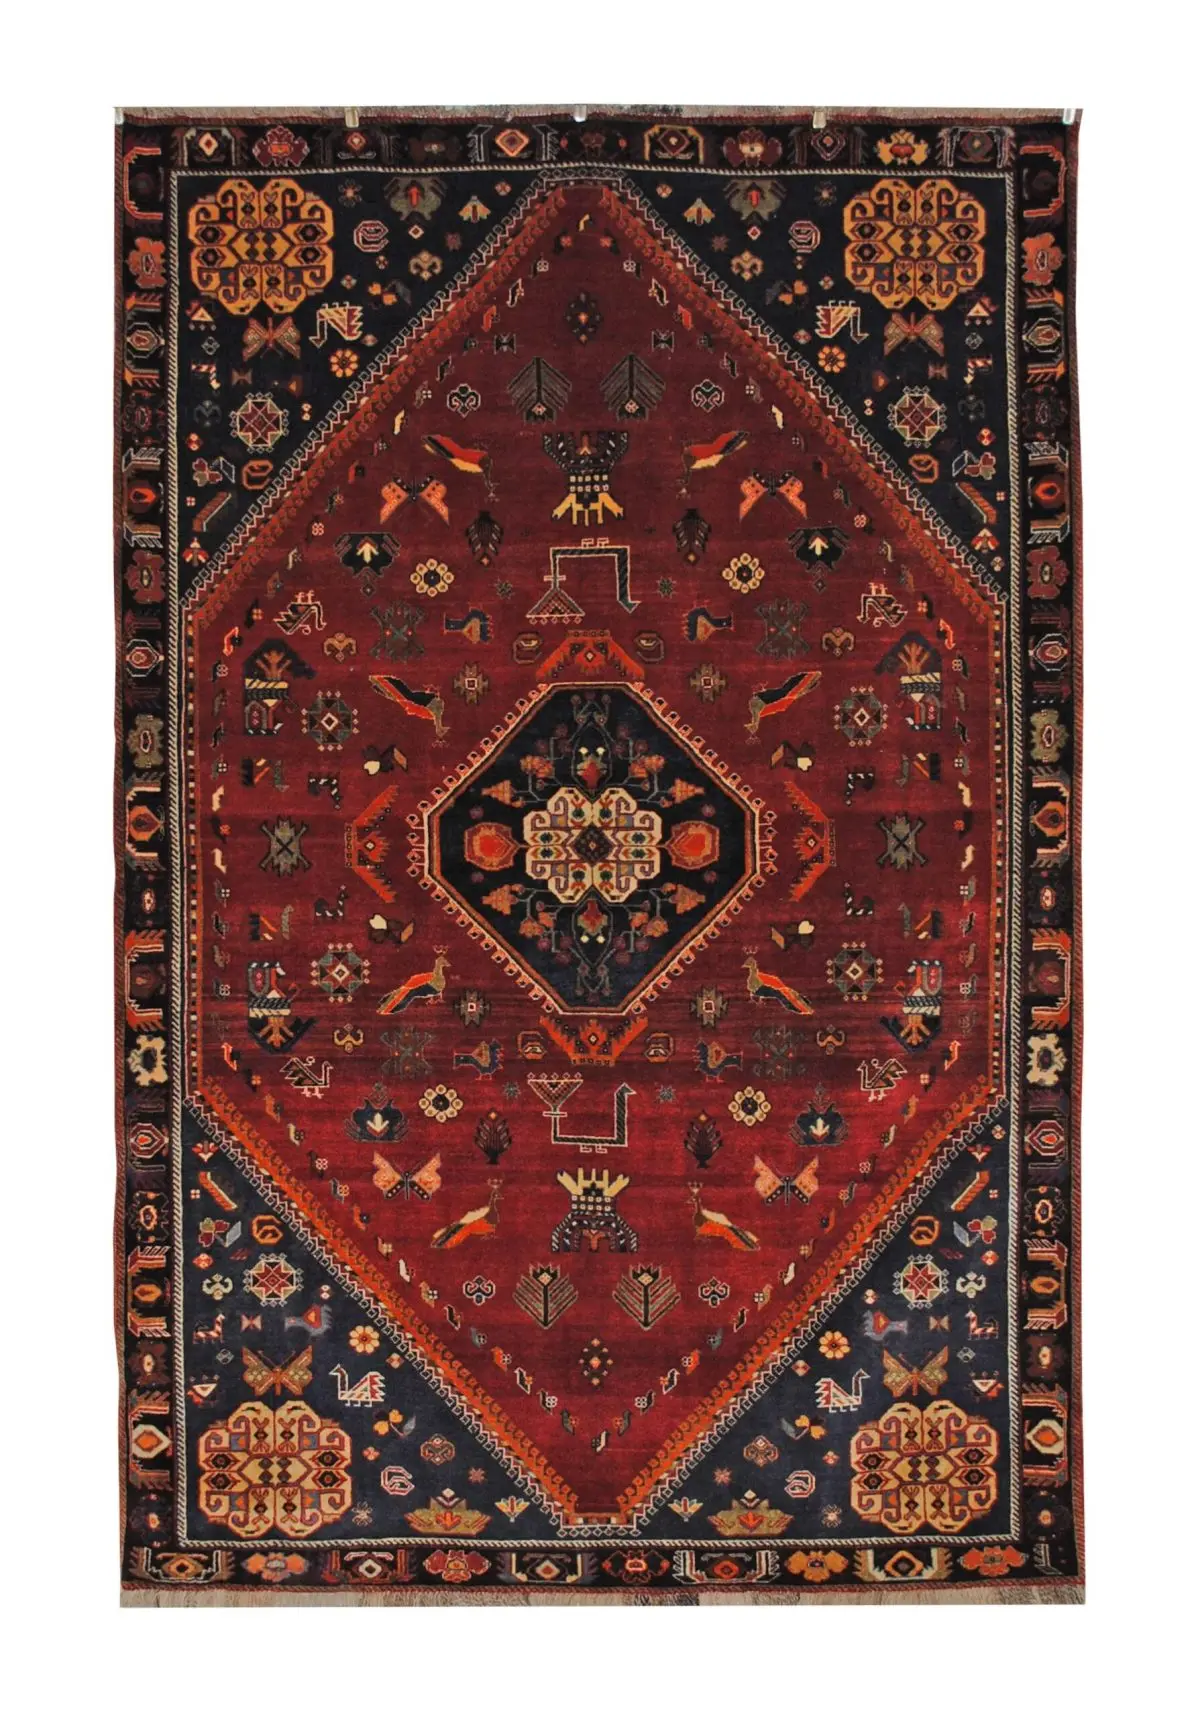 Antique Persian Ghashghaei 5' 2" x 8' Handmade Wool Area Rug - Shabahang Royal Carpet